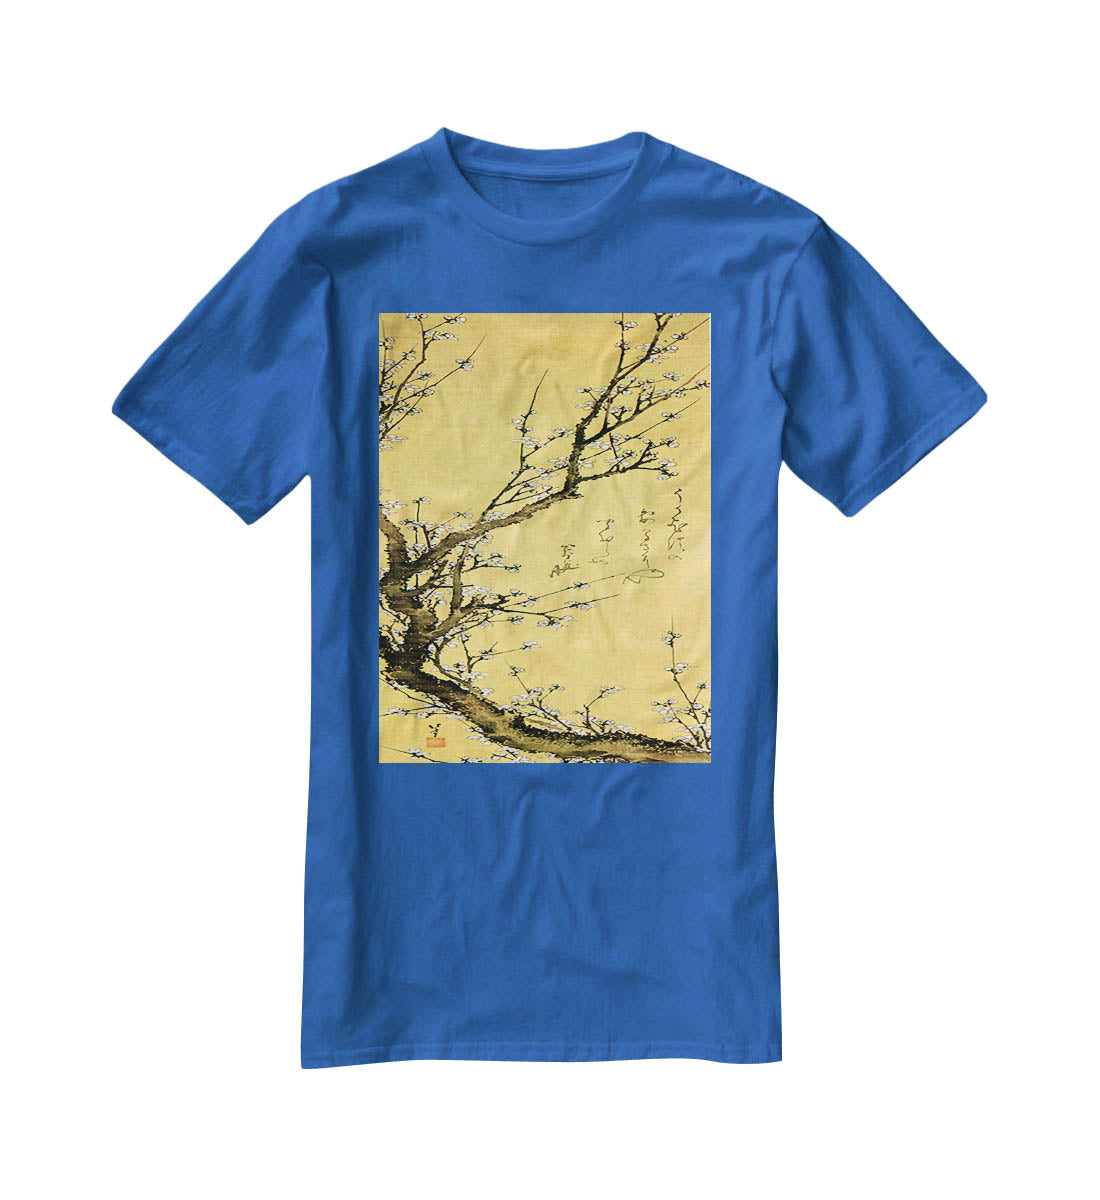 Flowering plum by Hokusai T-Shirt - Canvas Art Rocks - 2